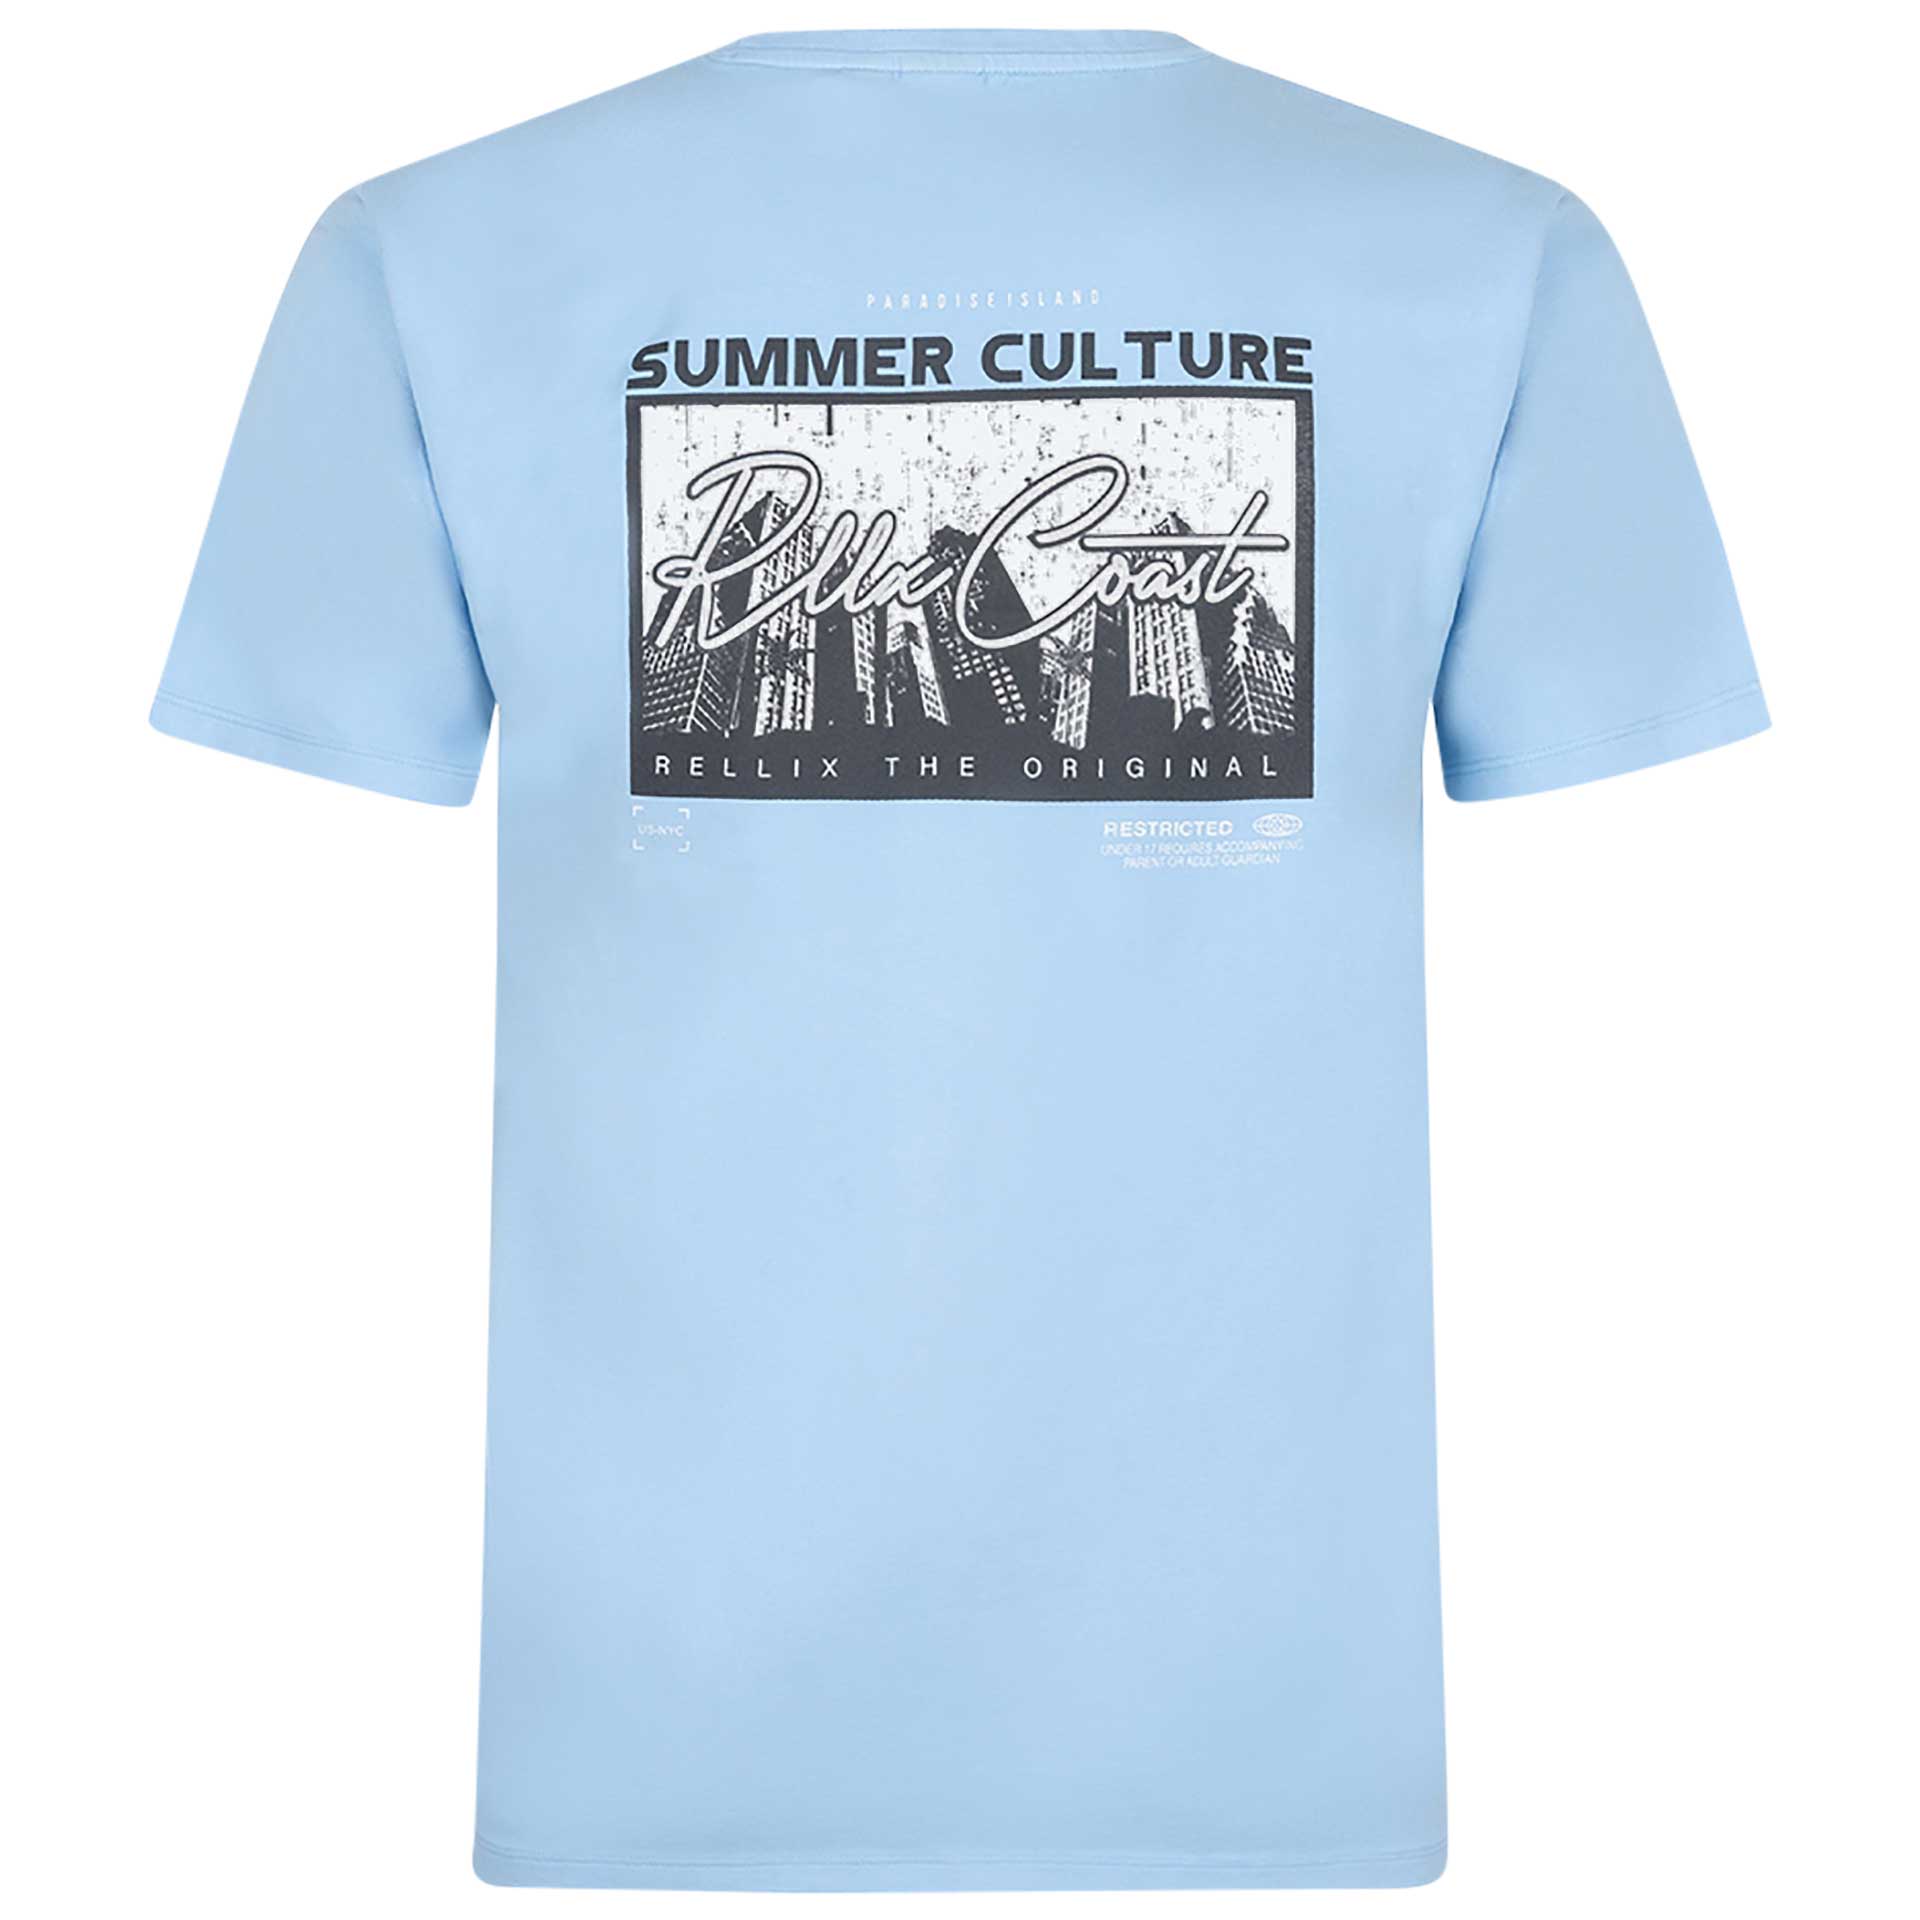 Rellix T-shirt Summer culture 2